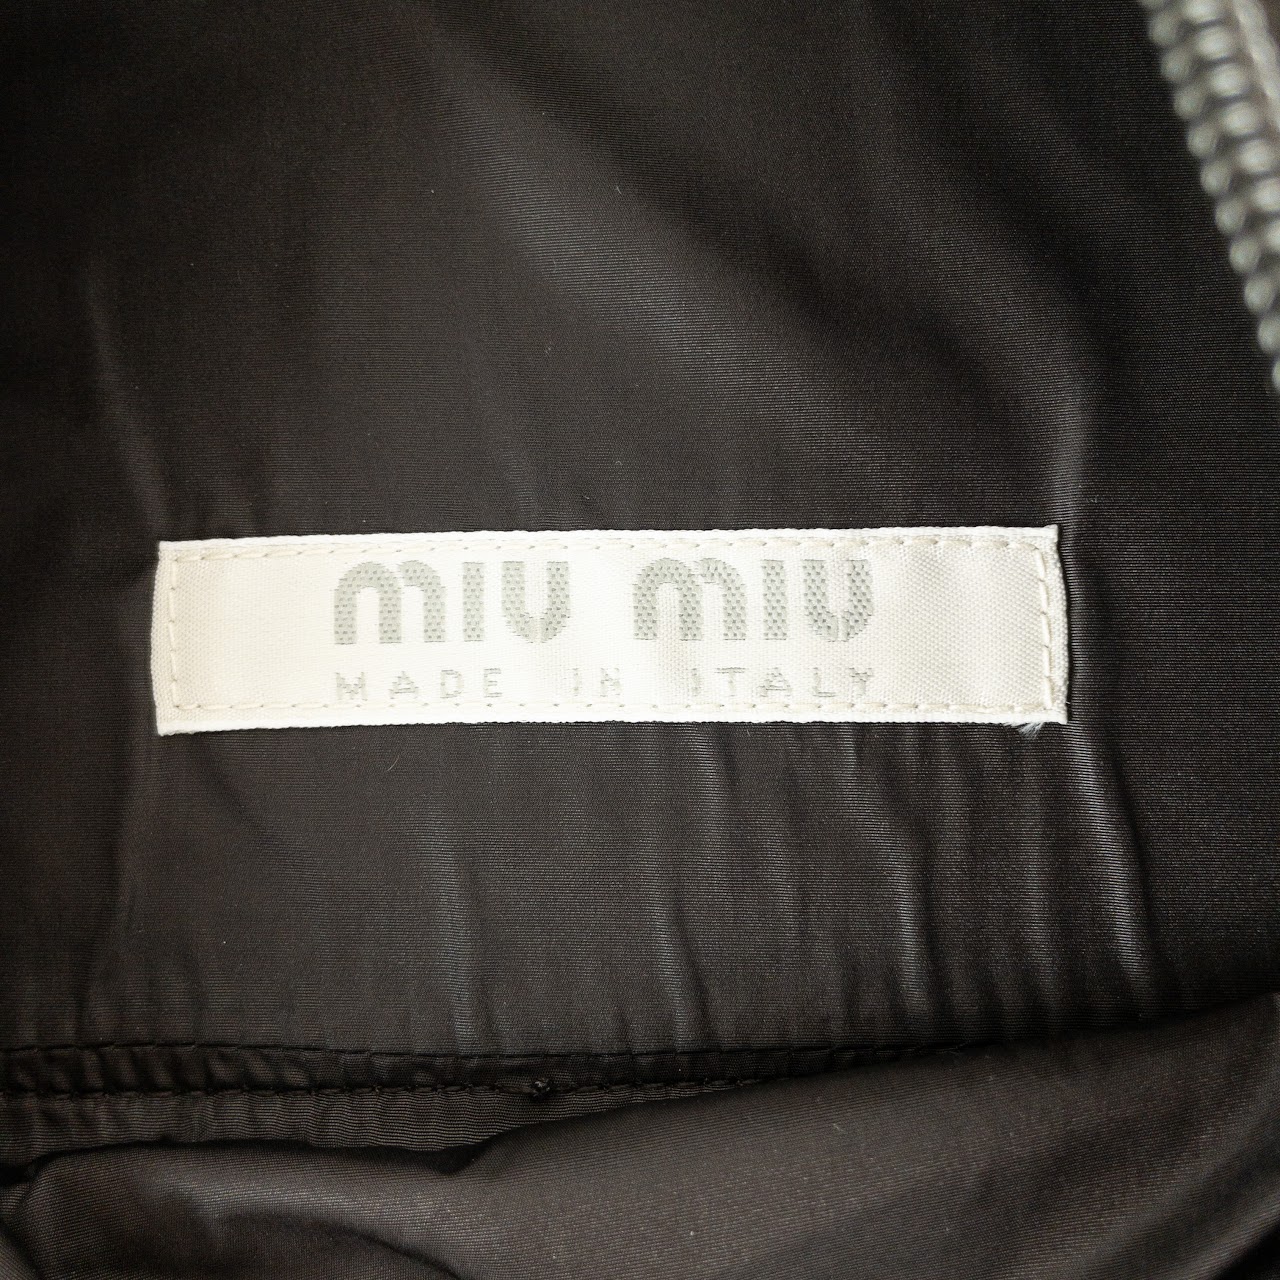 Miu Miu Convertible Leather & Nylon Duffle